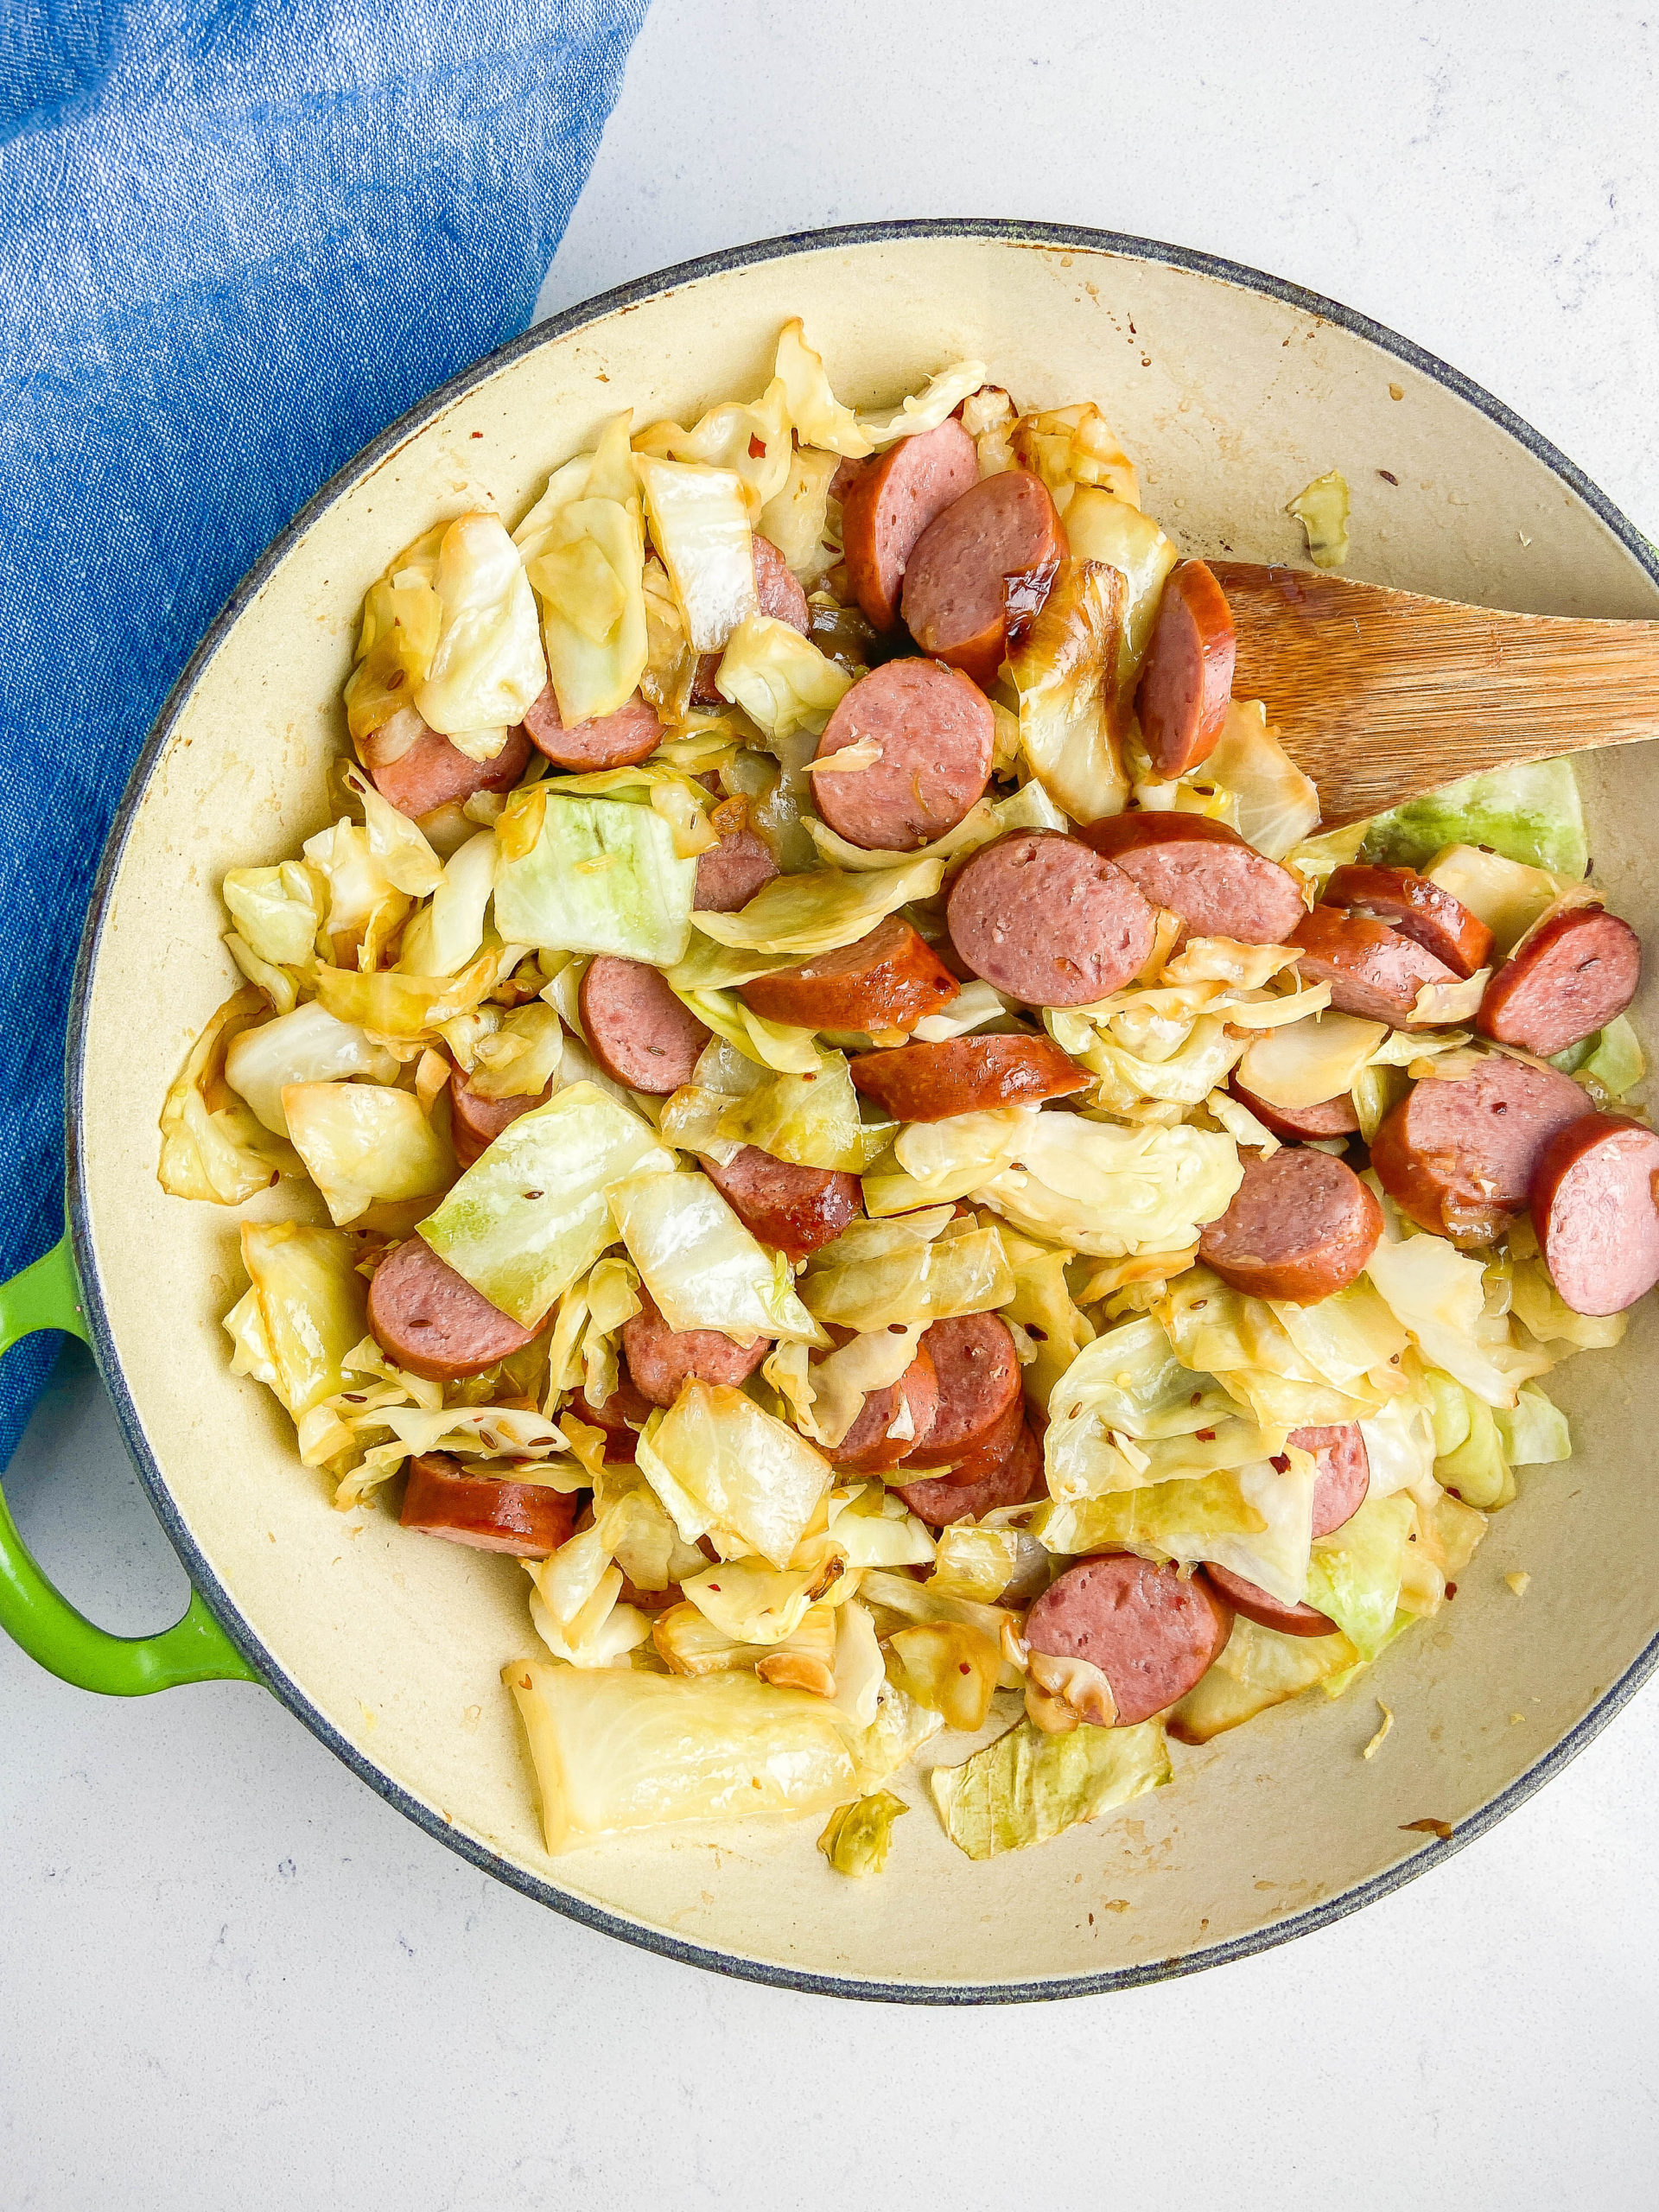 Skillet Kielbasa and Cabbage Recipe | Weeknight Meal | Life's Ambrosia